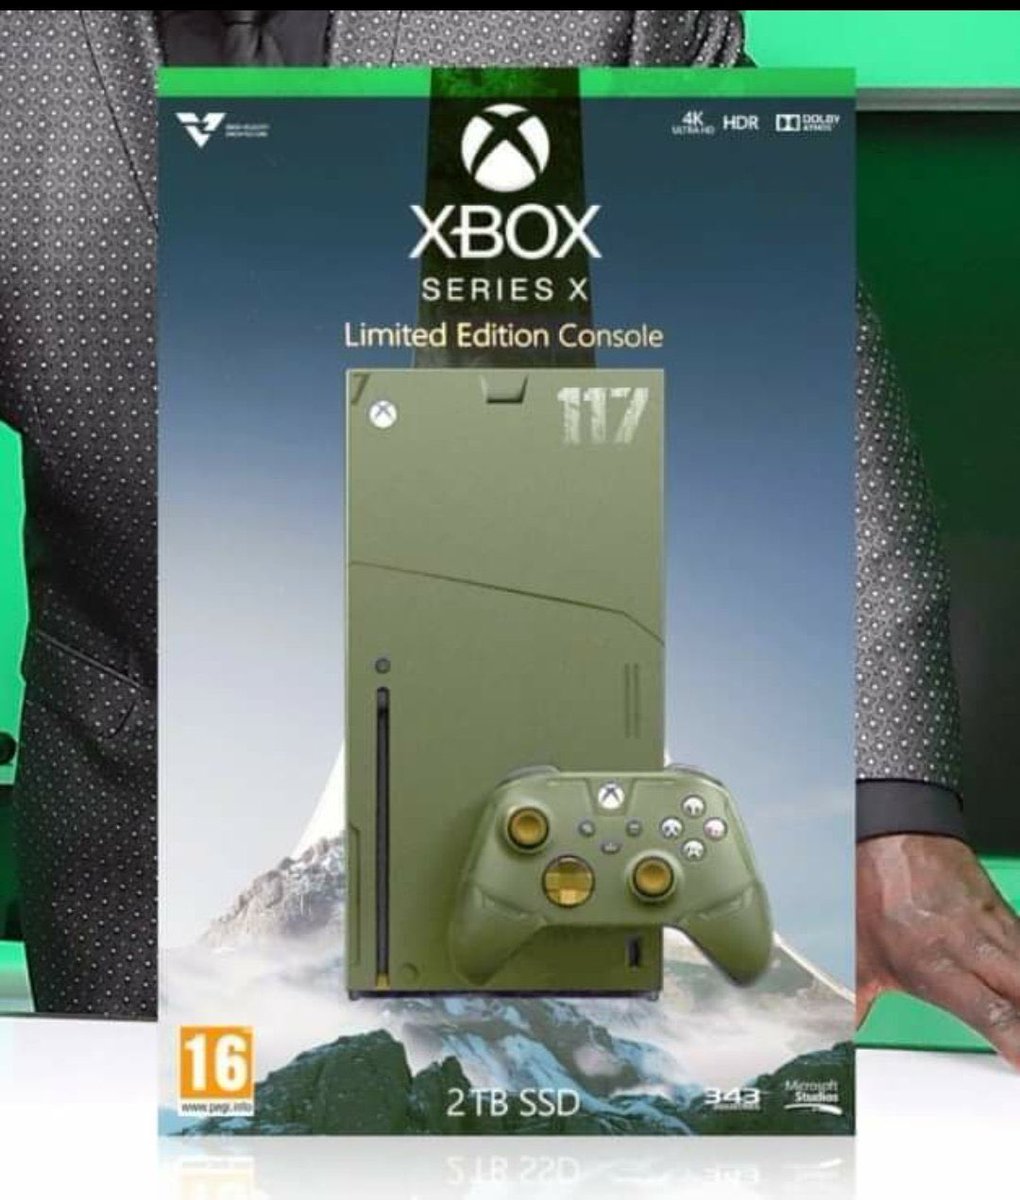 Выход xbox series x в россии. Xbox 360 Series x. Xbox Series x габариты коробки. Xbox Series x Limited Edition.